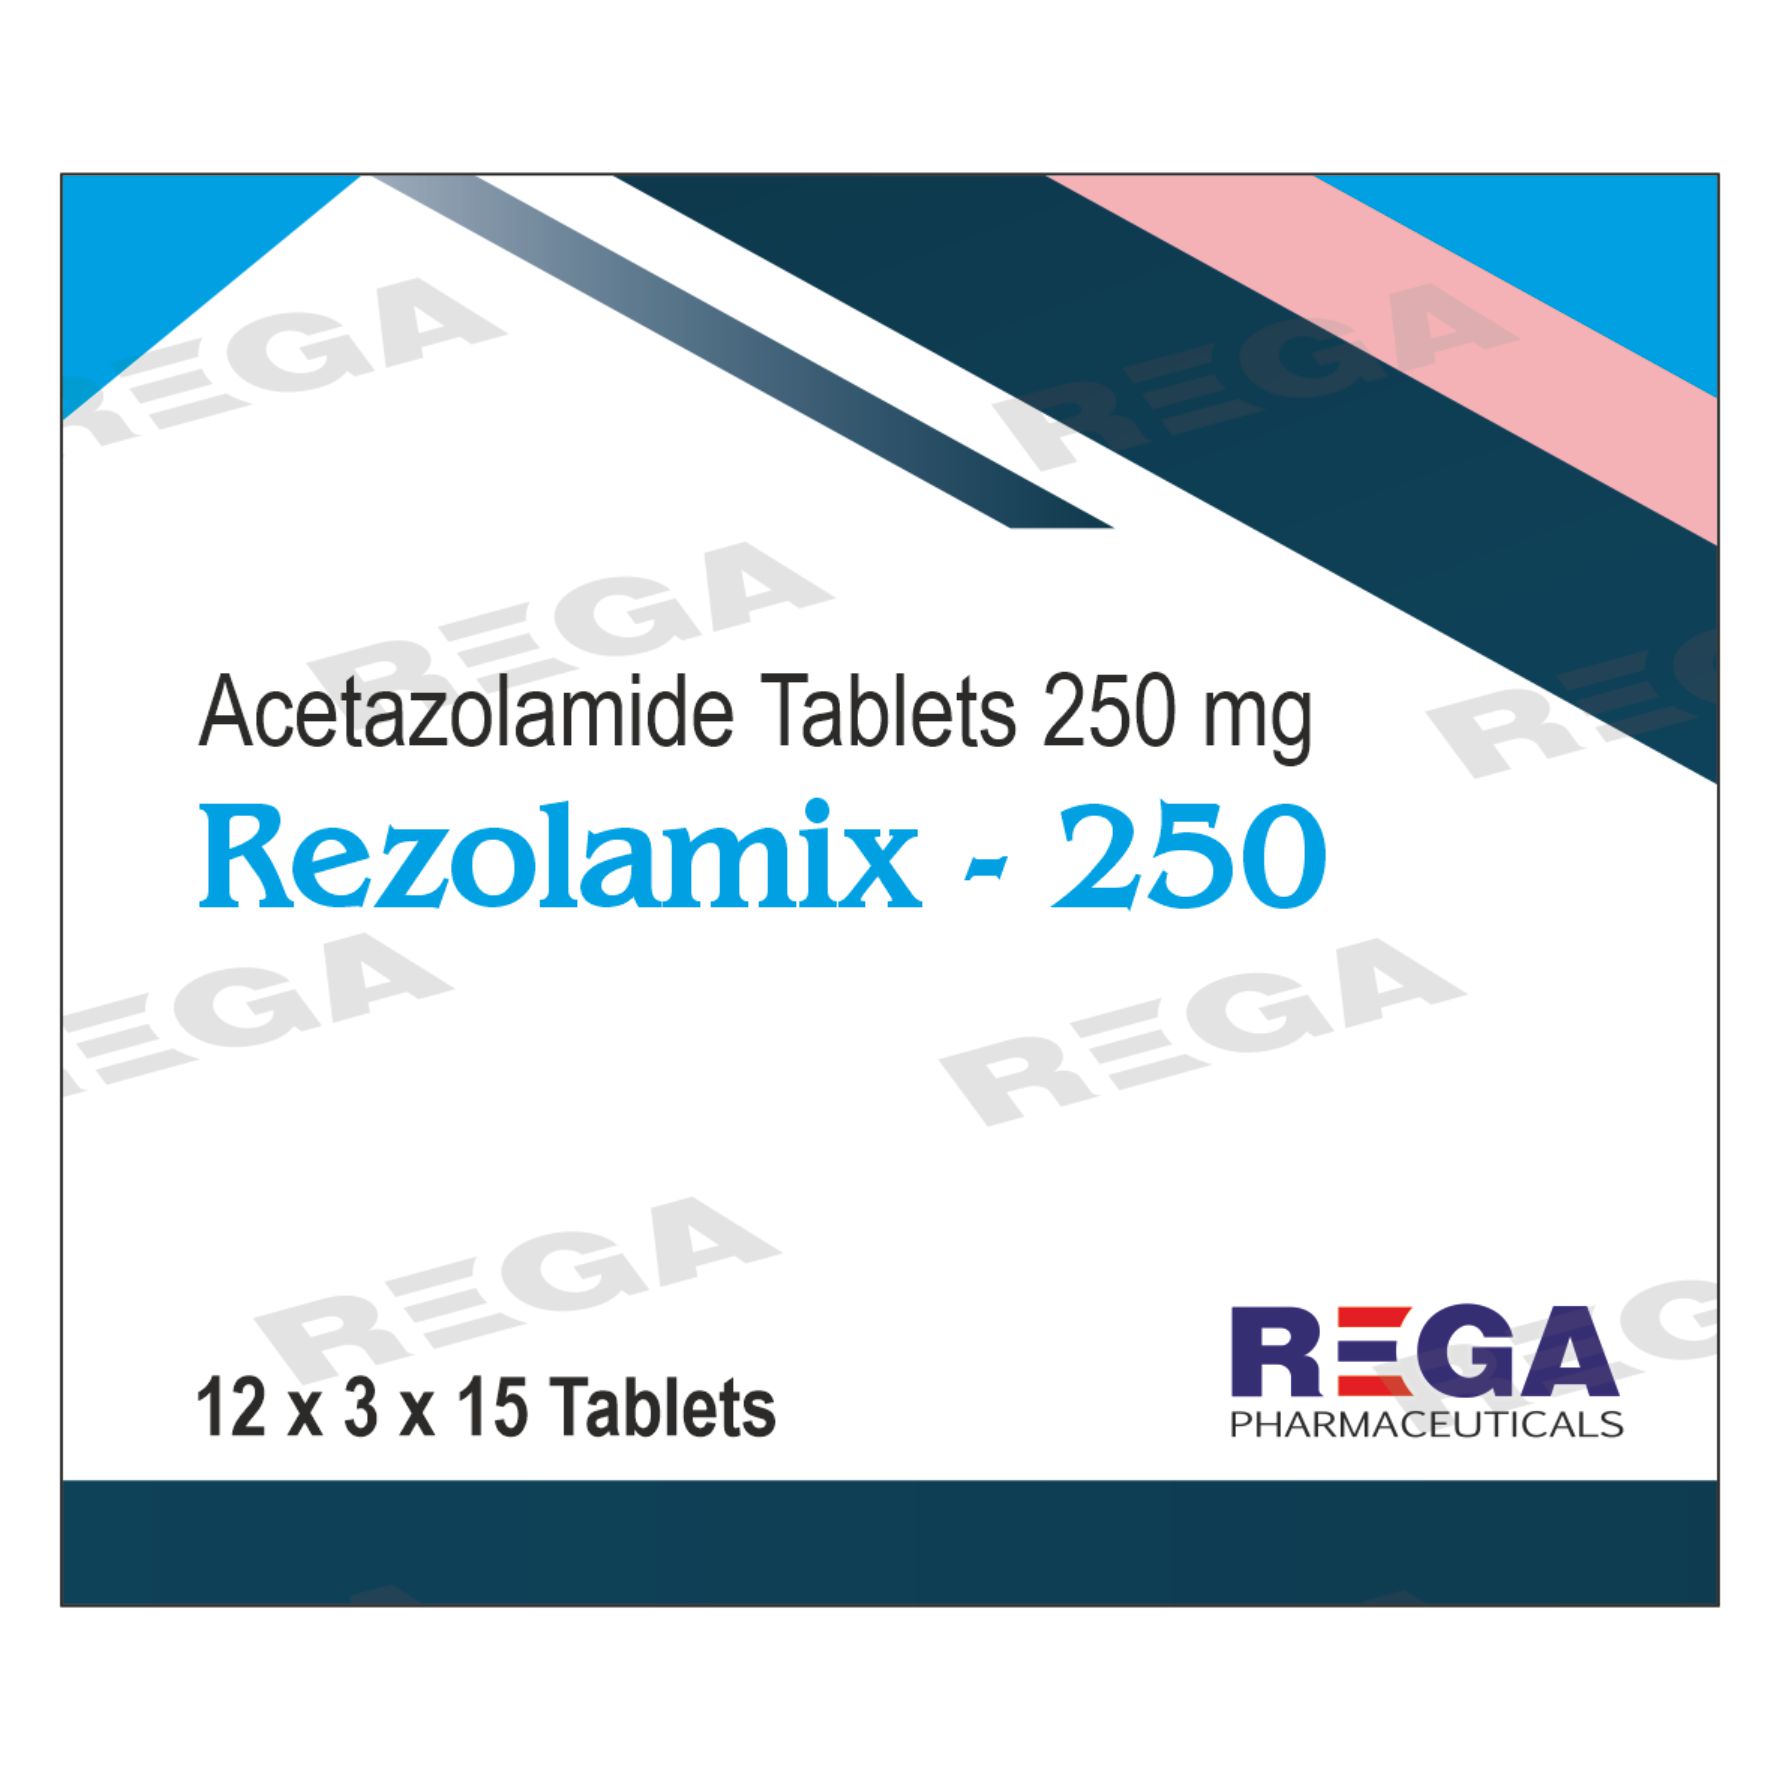 Acetazolamide Tablets 250 mg